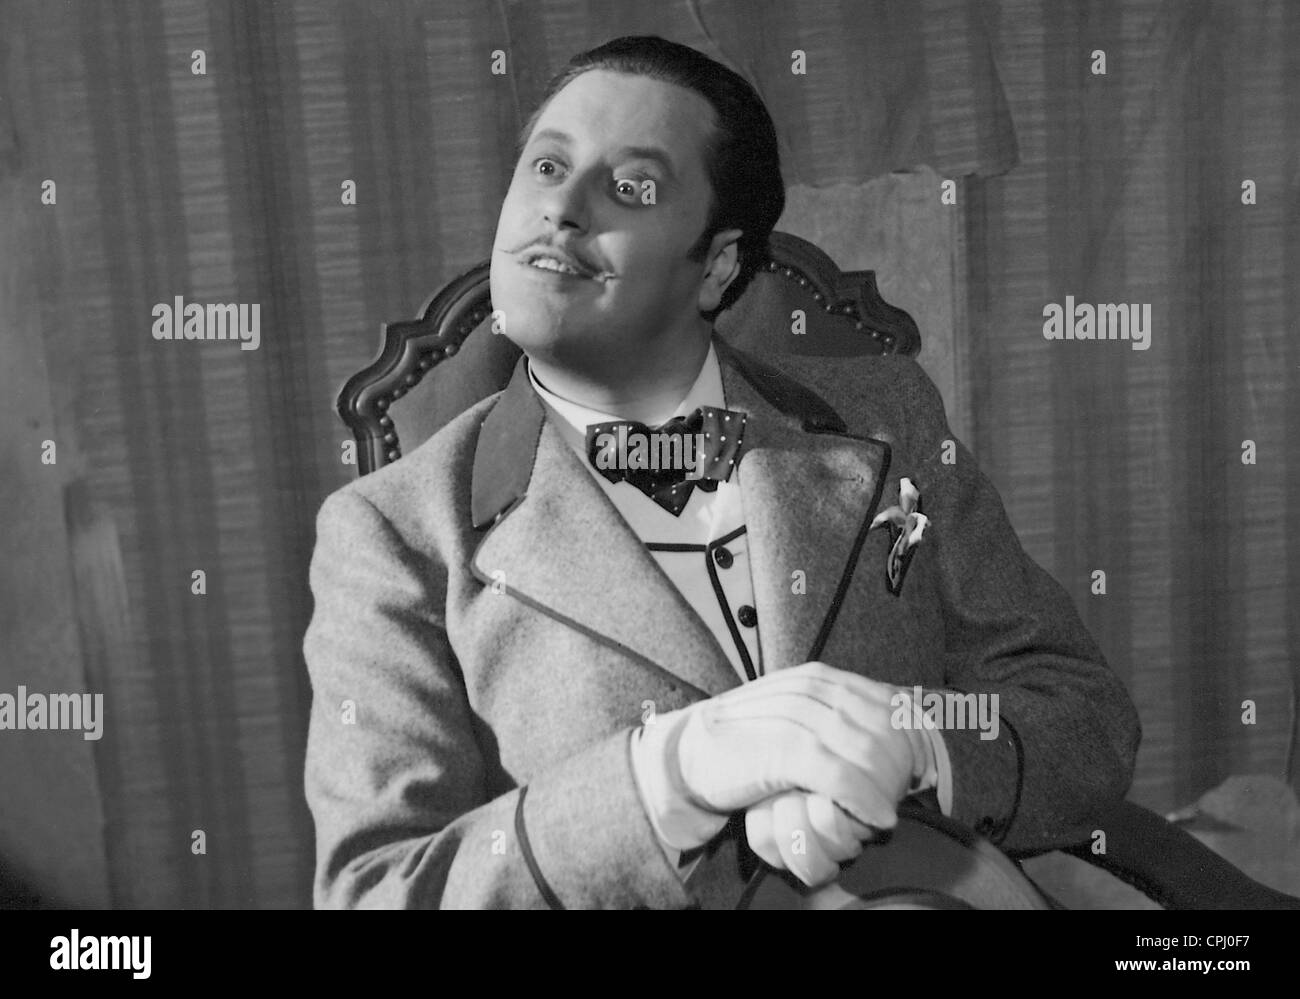 Paul Dahlke en 'Cubiertas pistas', 1938 Foto de stock